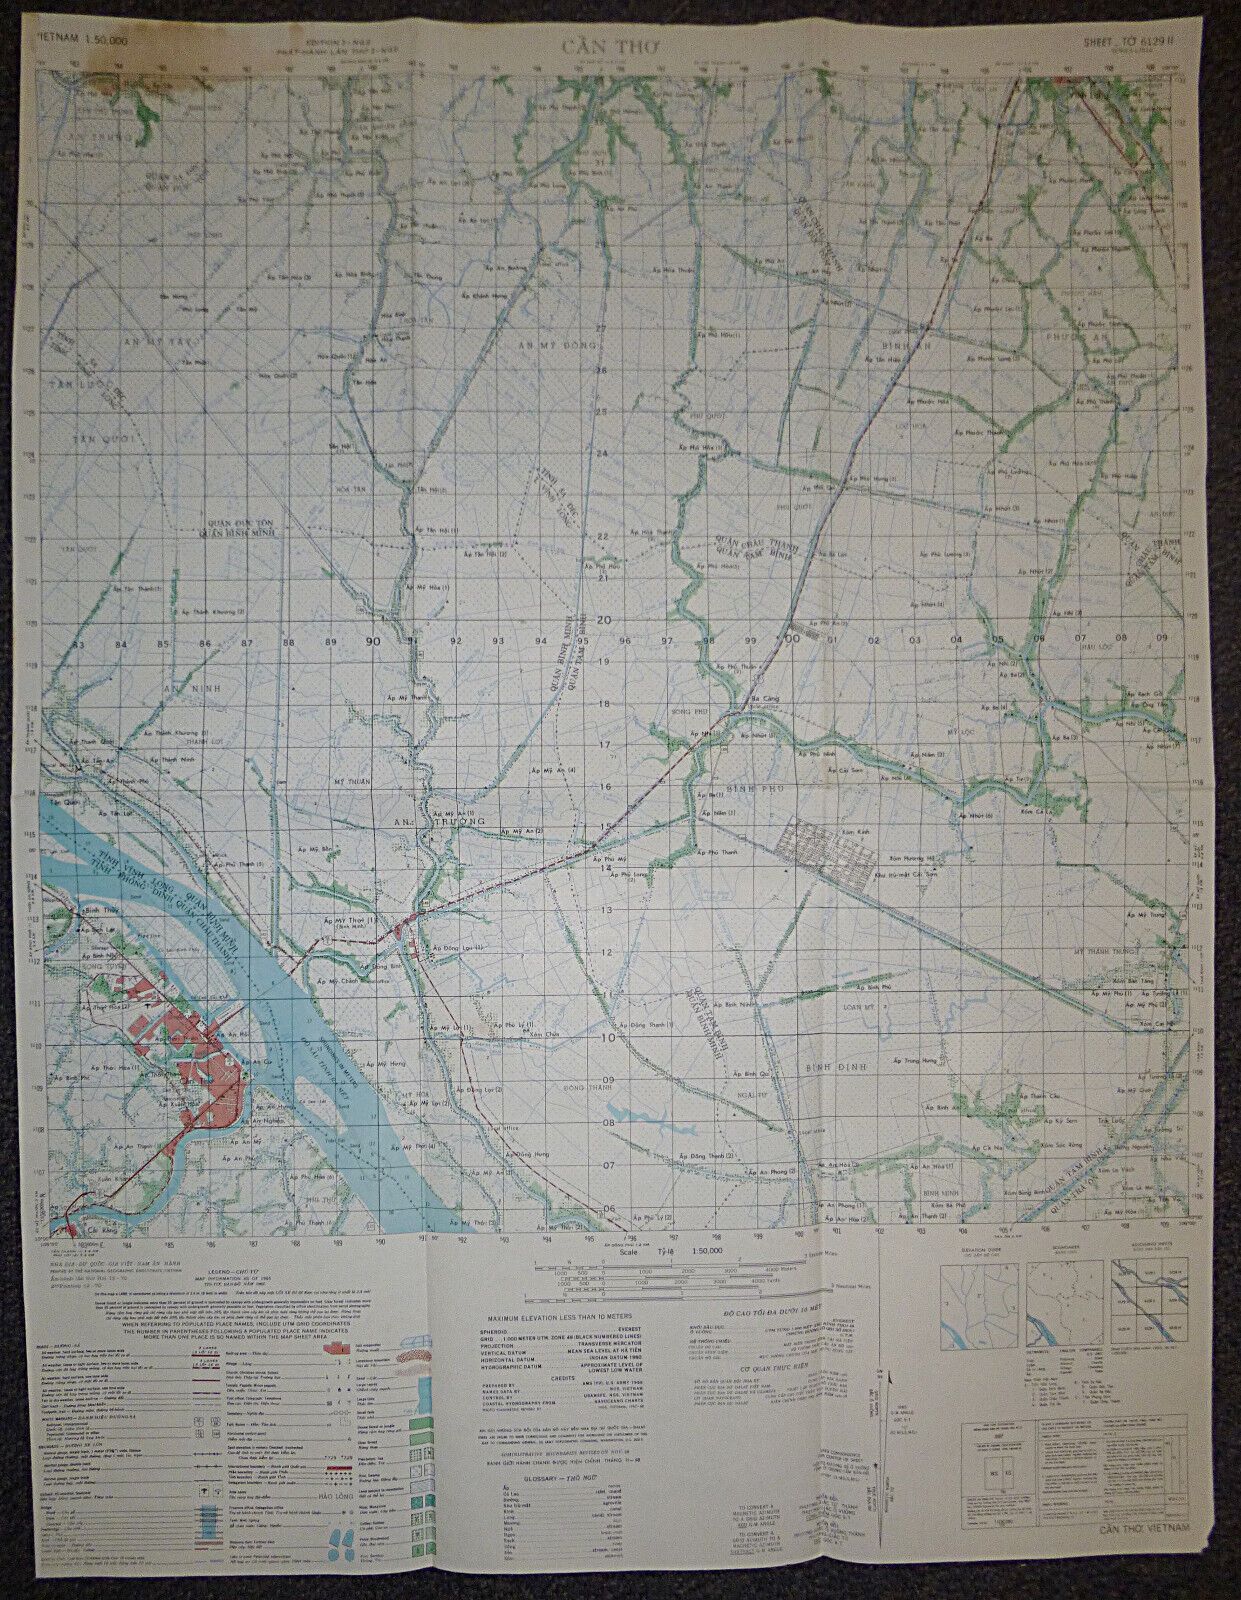 6129 ii - Rare US MAP - Can Tho Combat Base - City - December 1970 - VIETNAM WAR